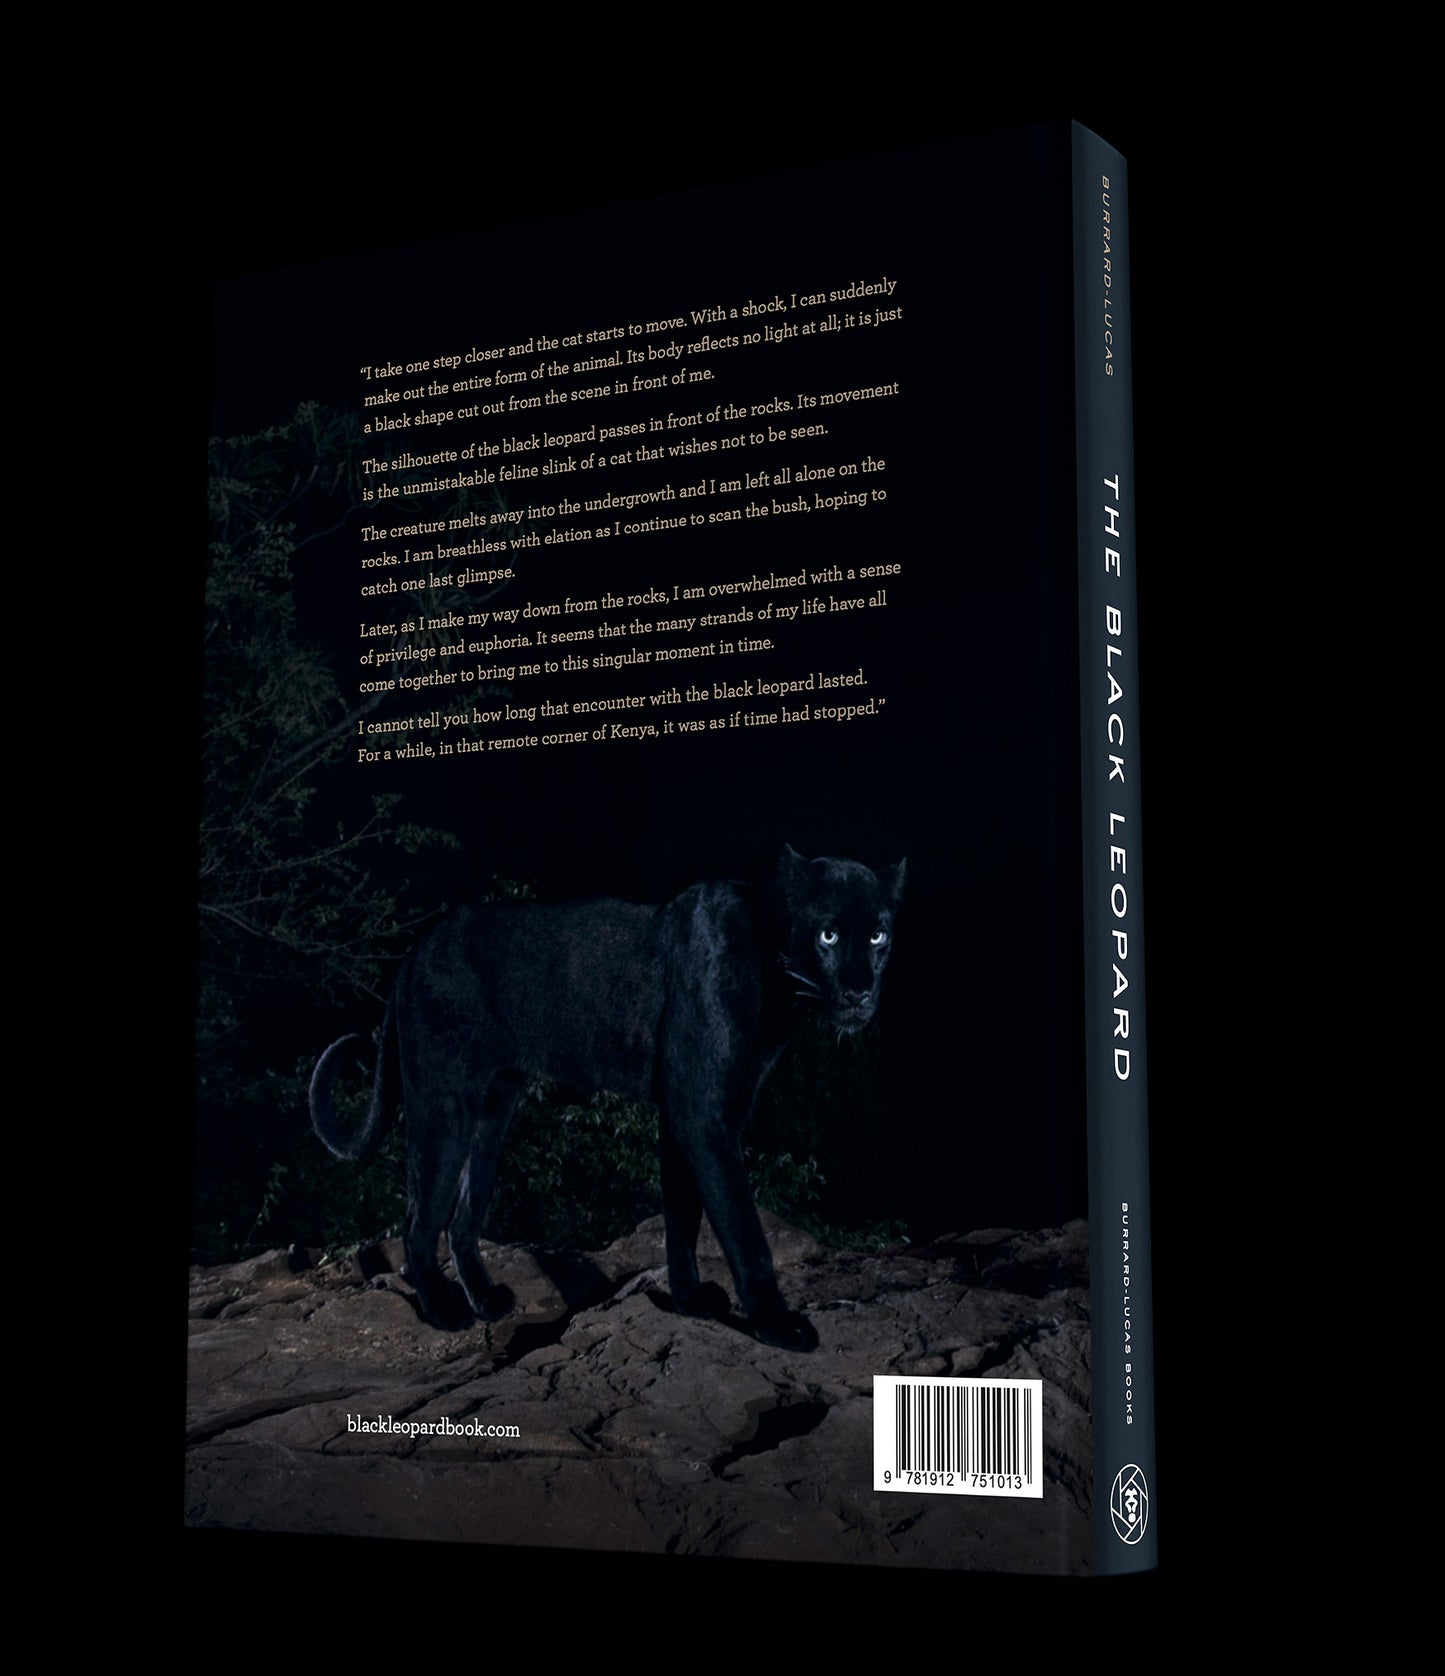 The Black Leopard – HPH Publishing